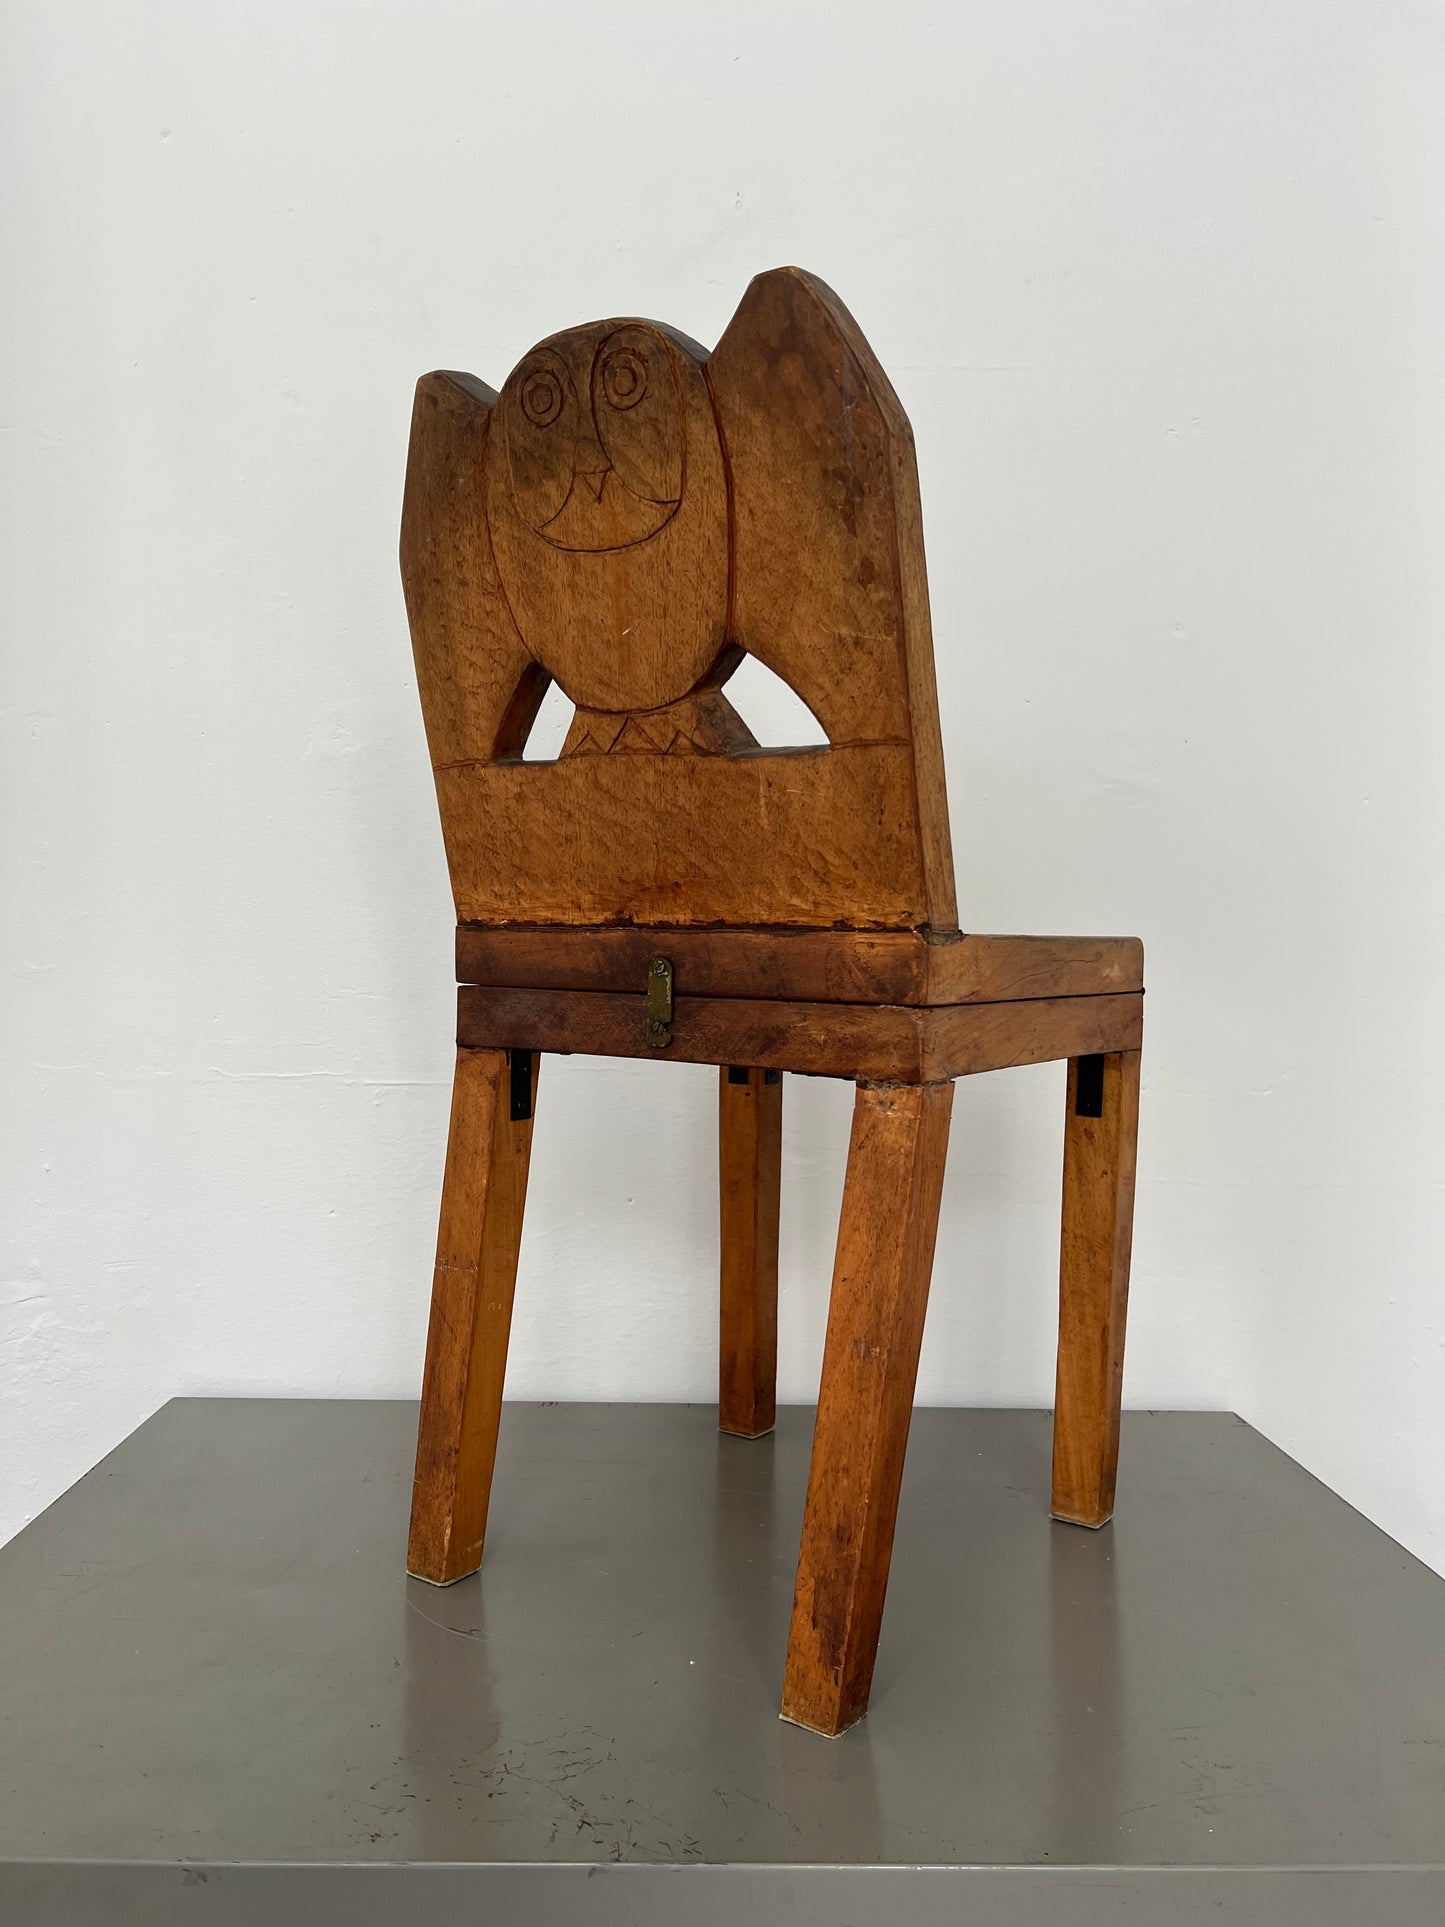 Gunnar Westman. Unique folding chair, 1974